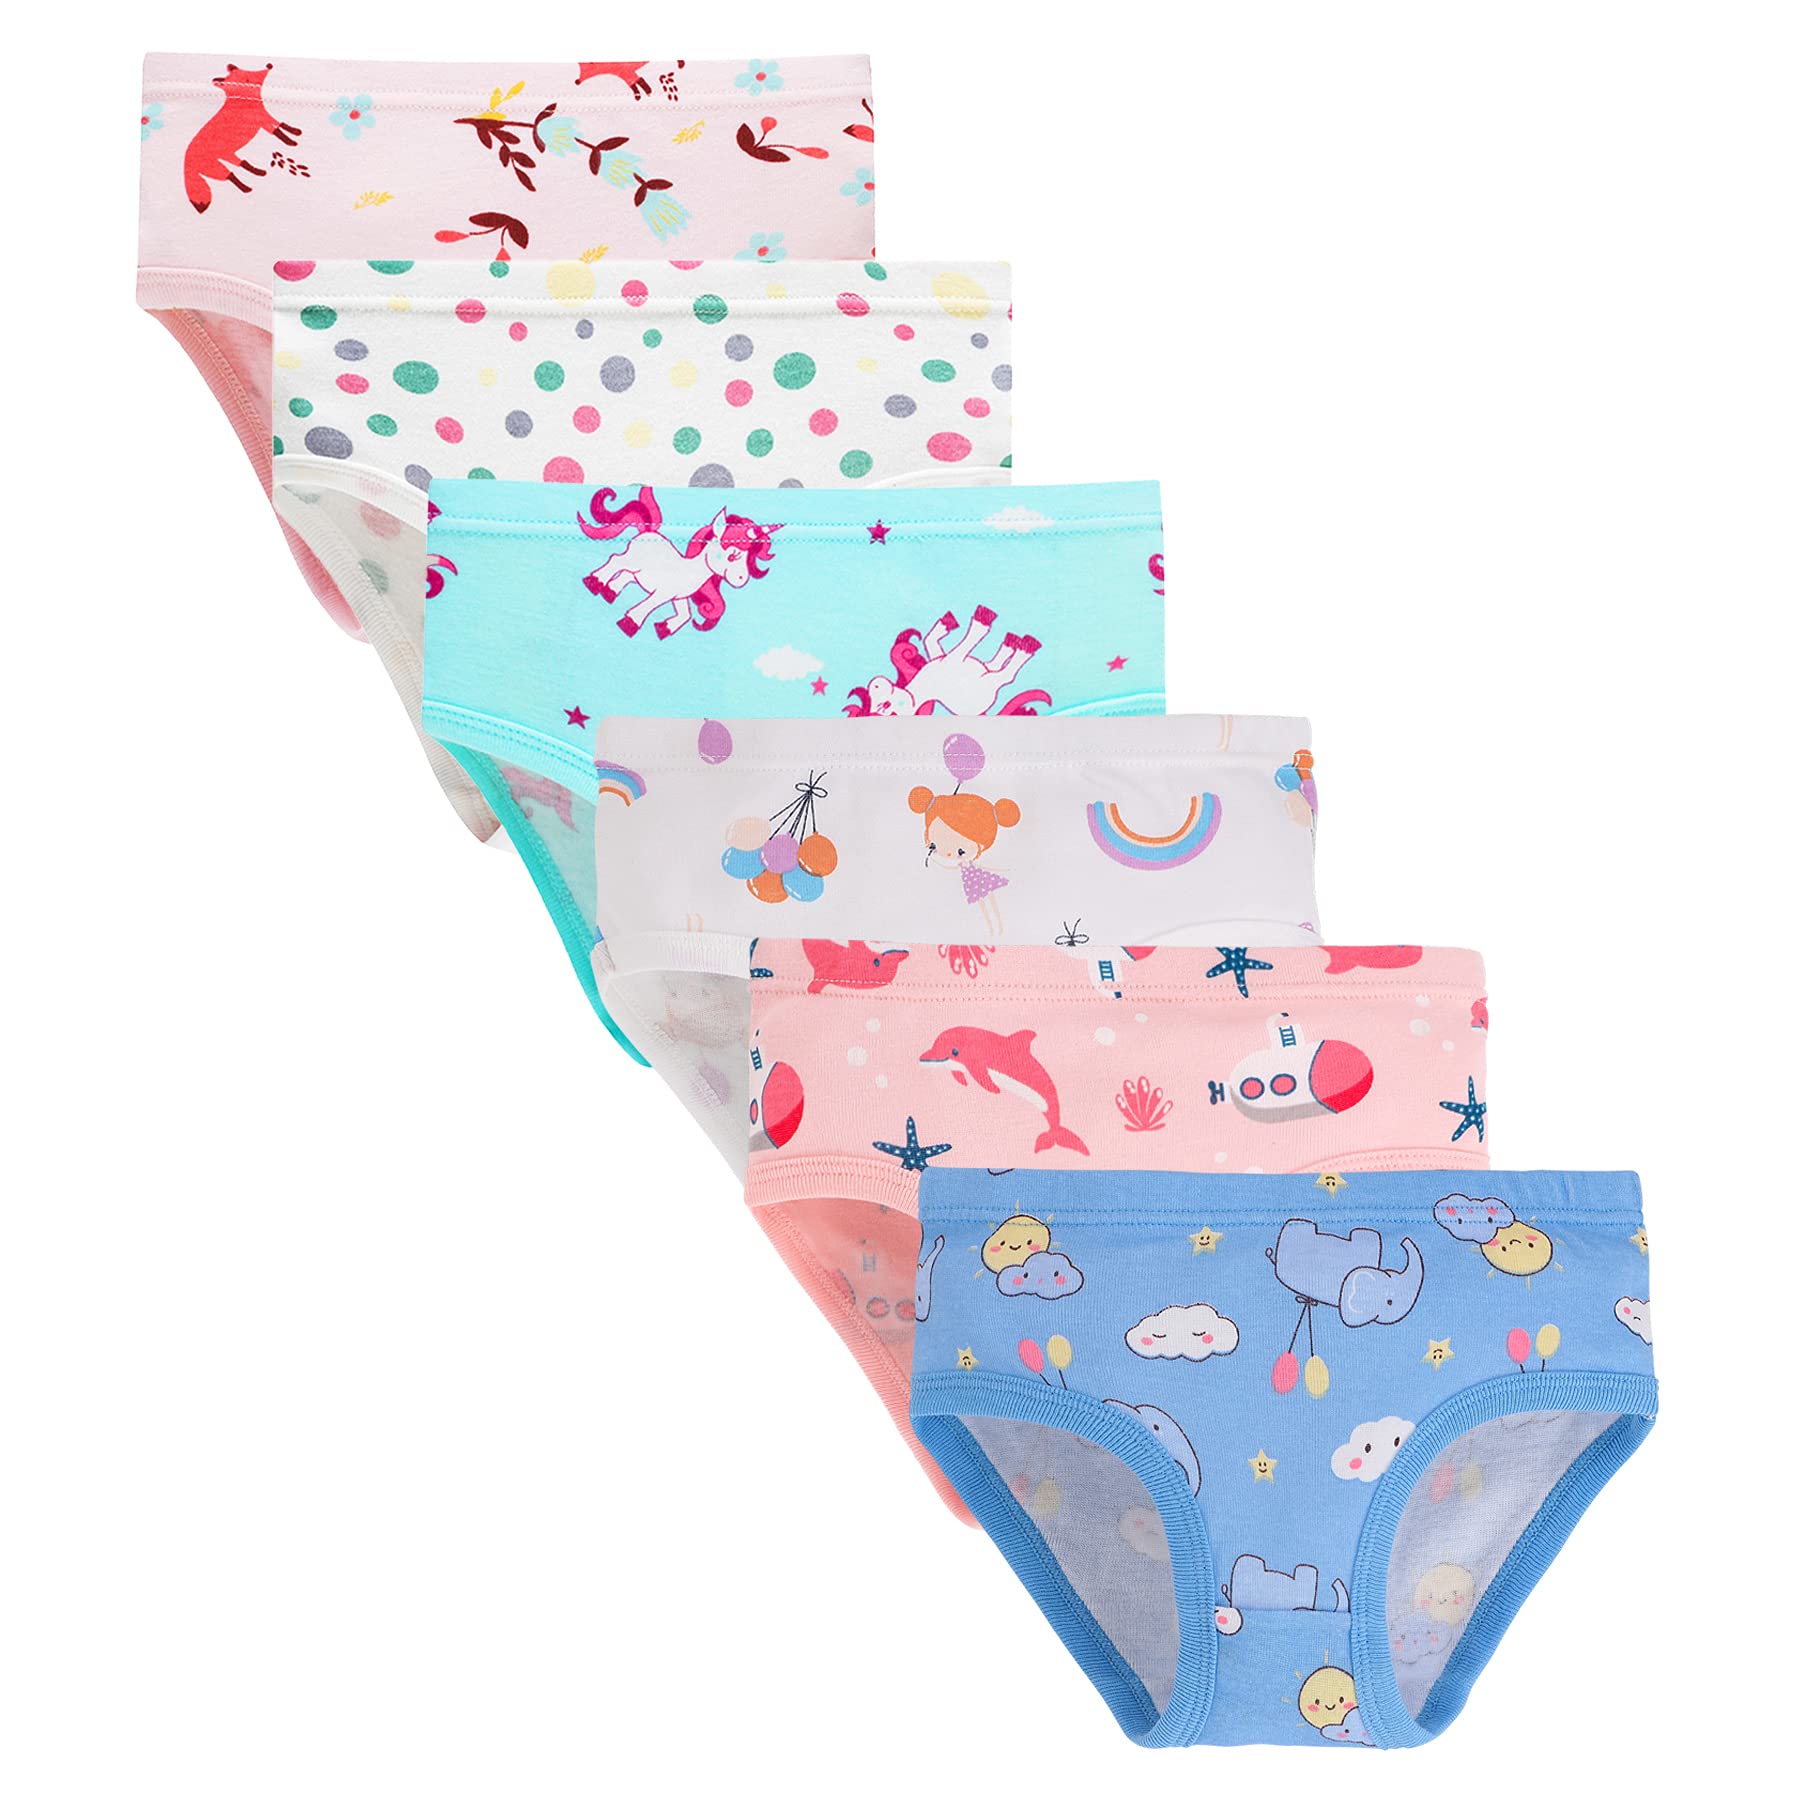 Sladatona Little Girls' Soft Cotton Underwear Bring Cool, Breathable  Comfort Experience Panty 2-3t